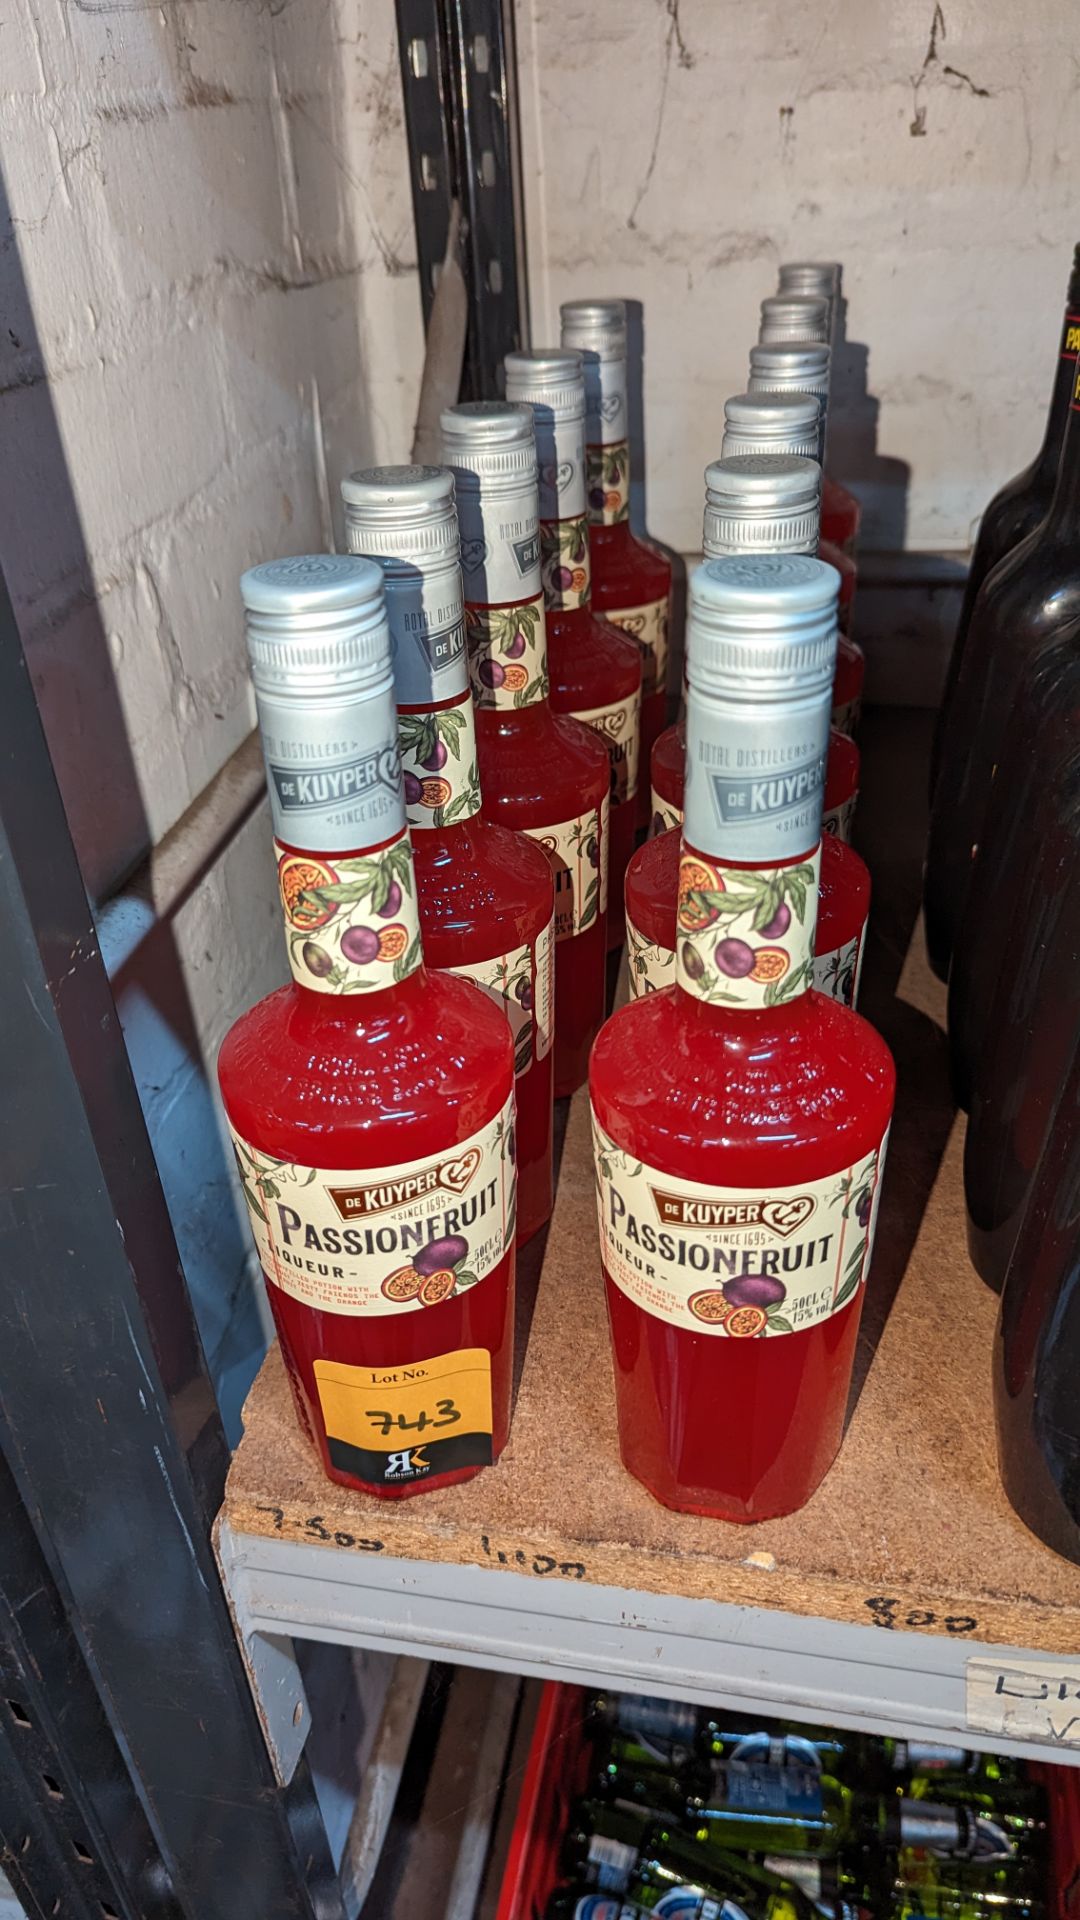 11 bottles of De Kuyper passionfruit liqueur sold under AWRS number XQAW00000101017